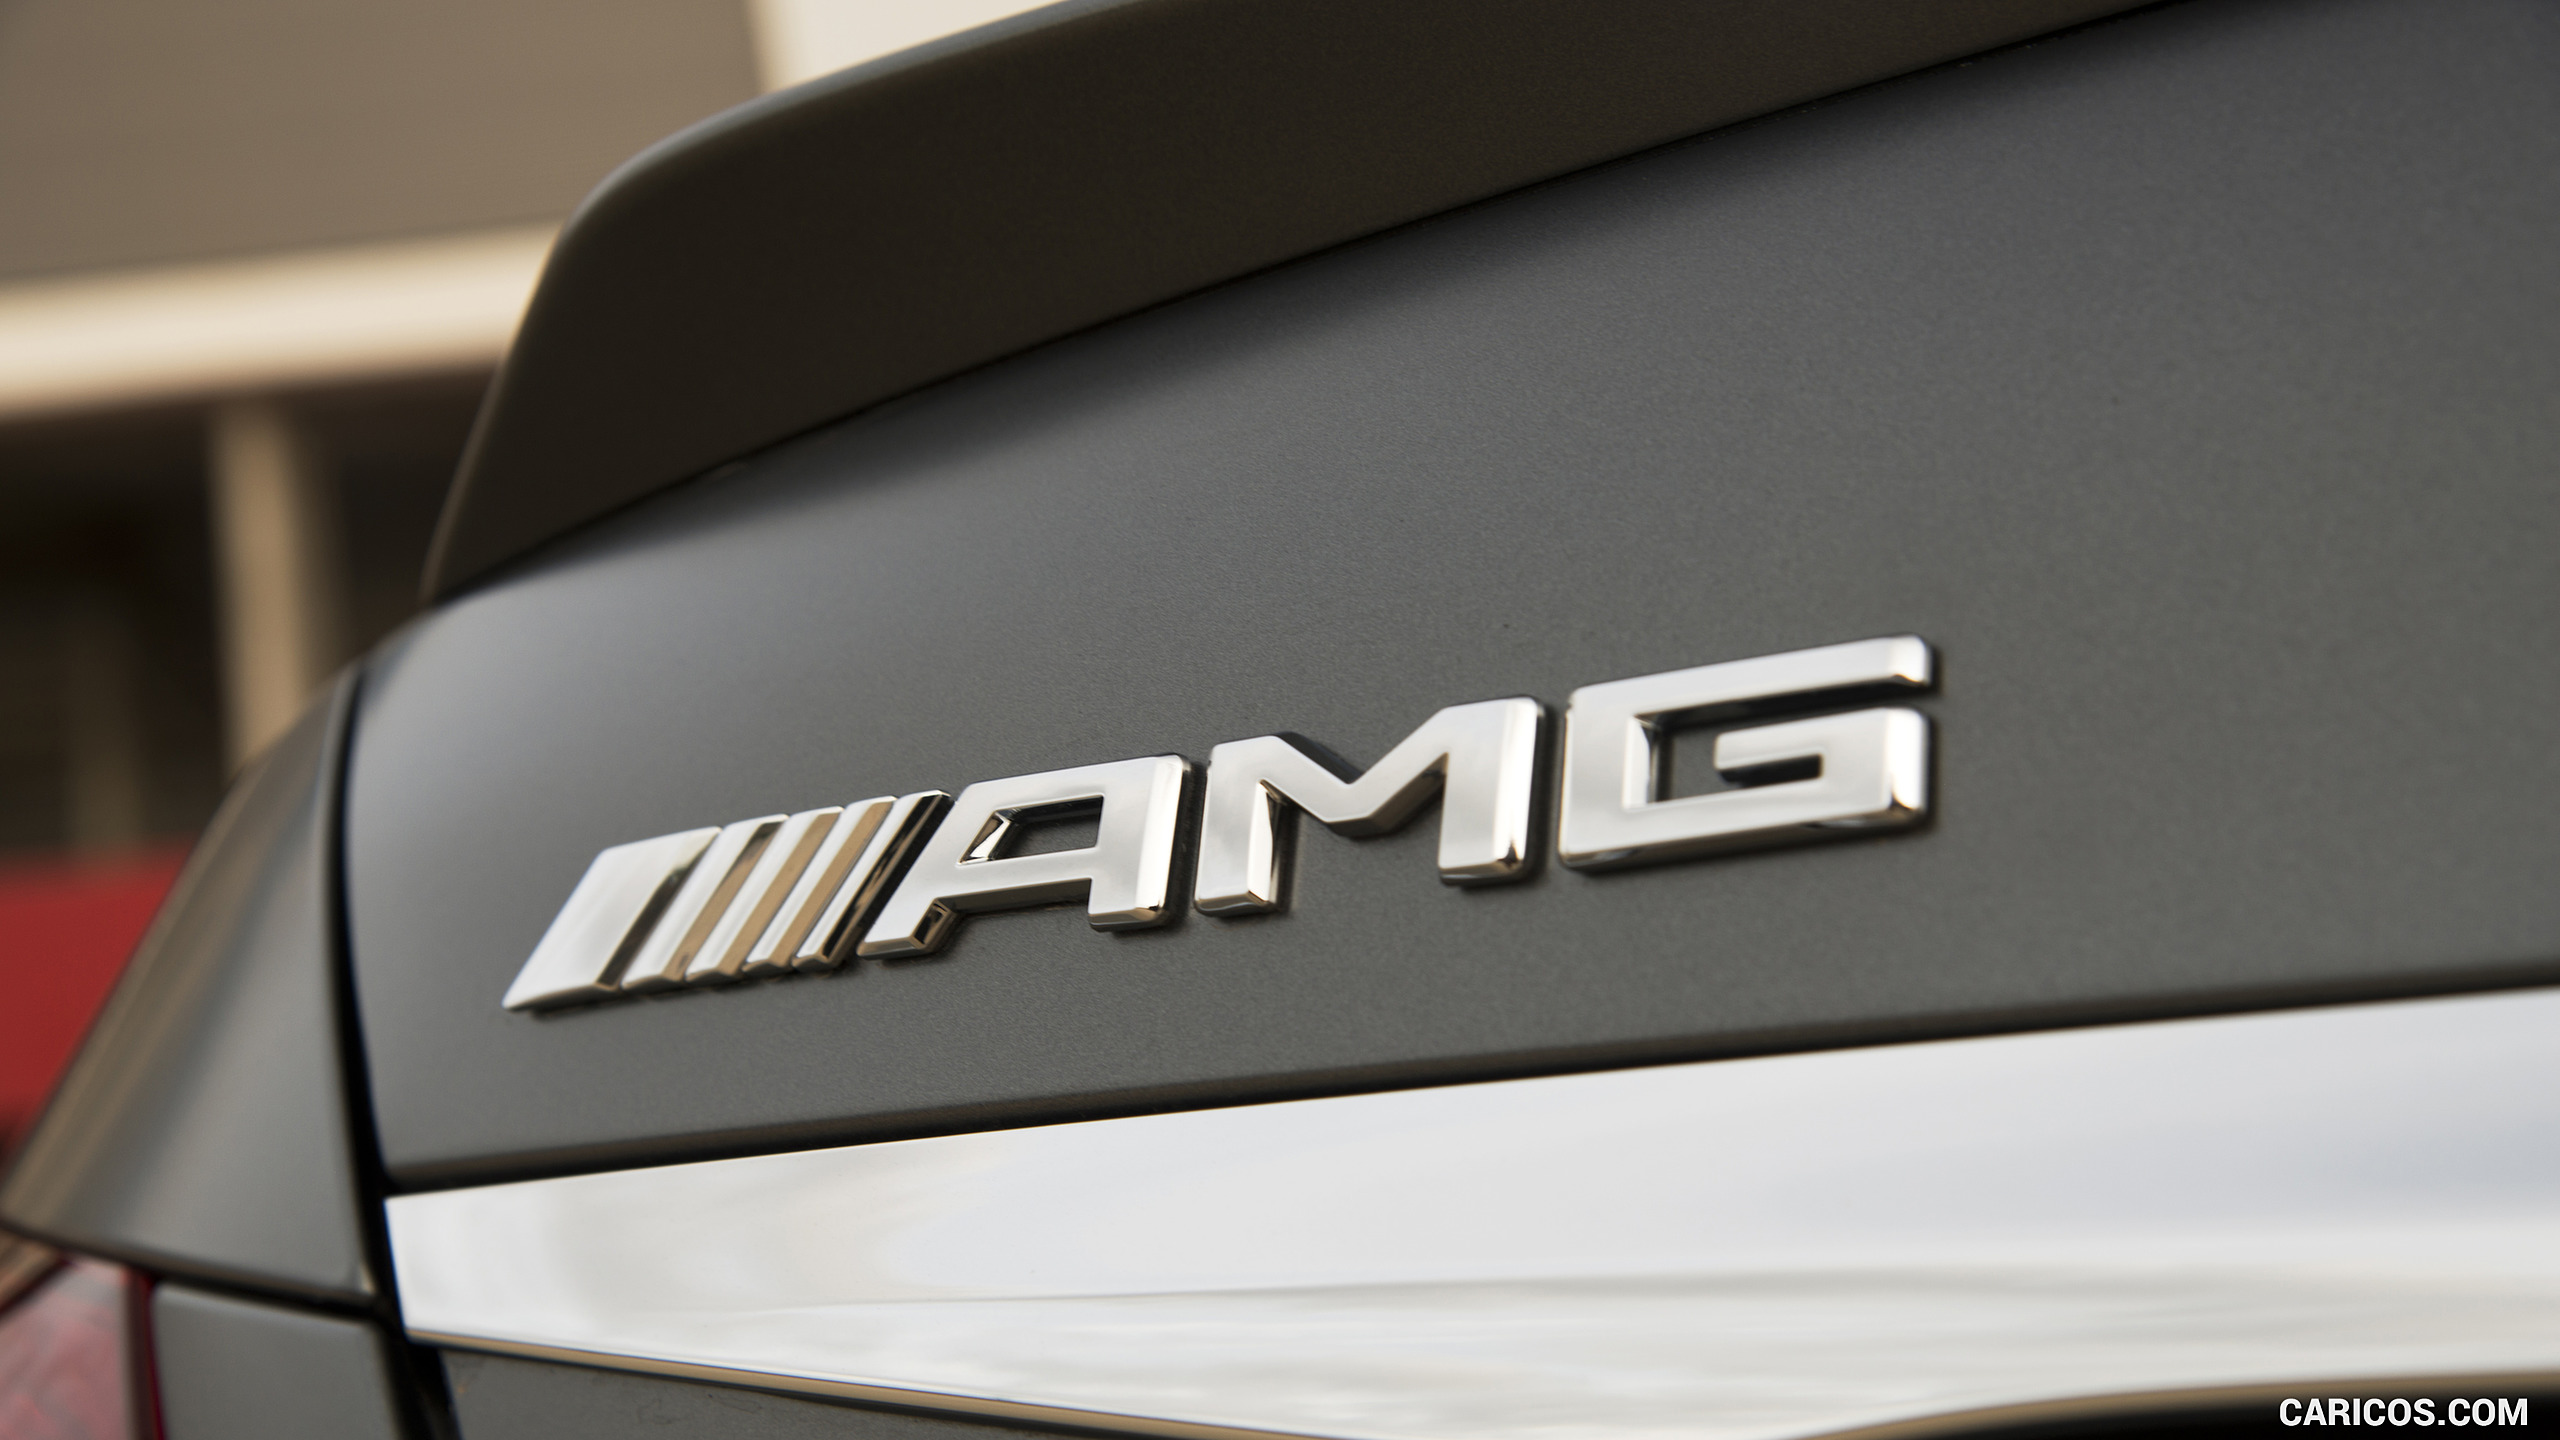 2018 Mercedes-AMG E63 S 4MATIC+ - Badge, #317 of 323